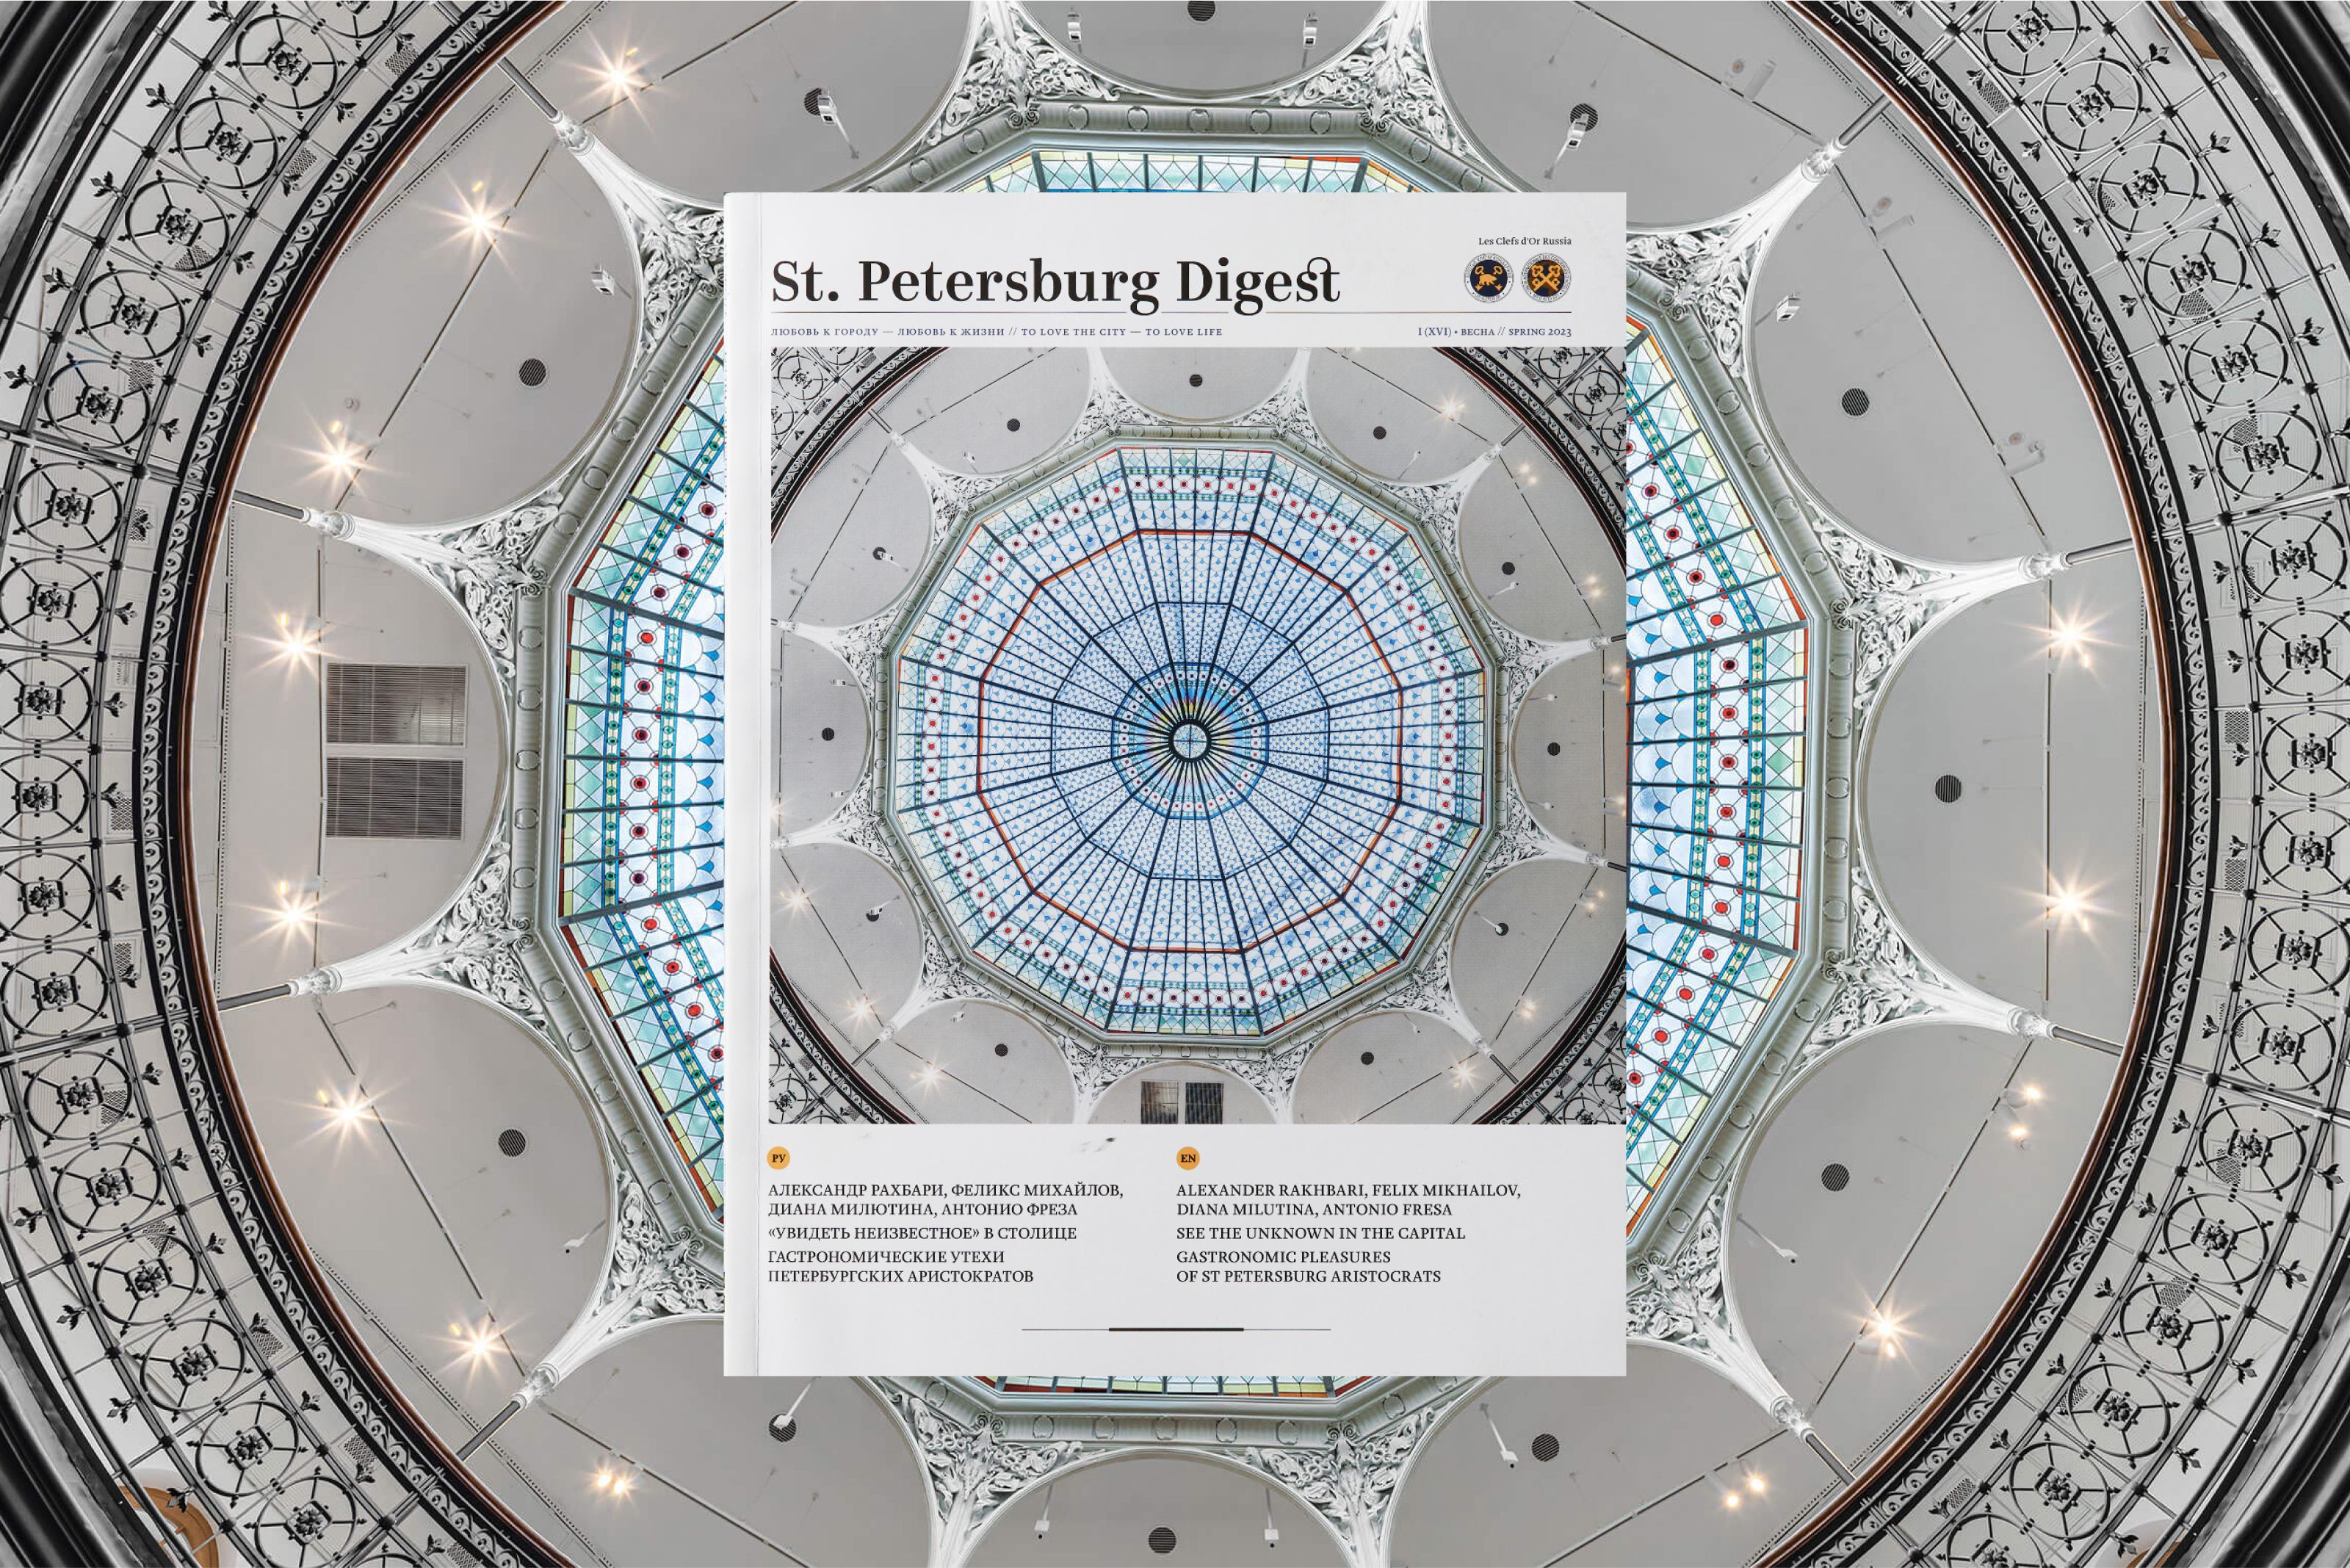 St.Petersburg Digest — Изображение №3 — Брендинг, Графика на Dprofile